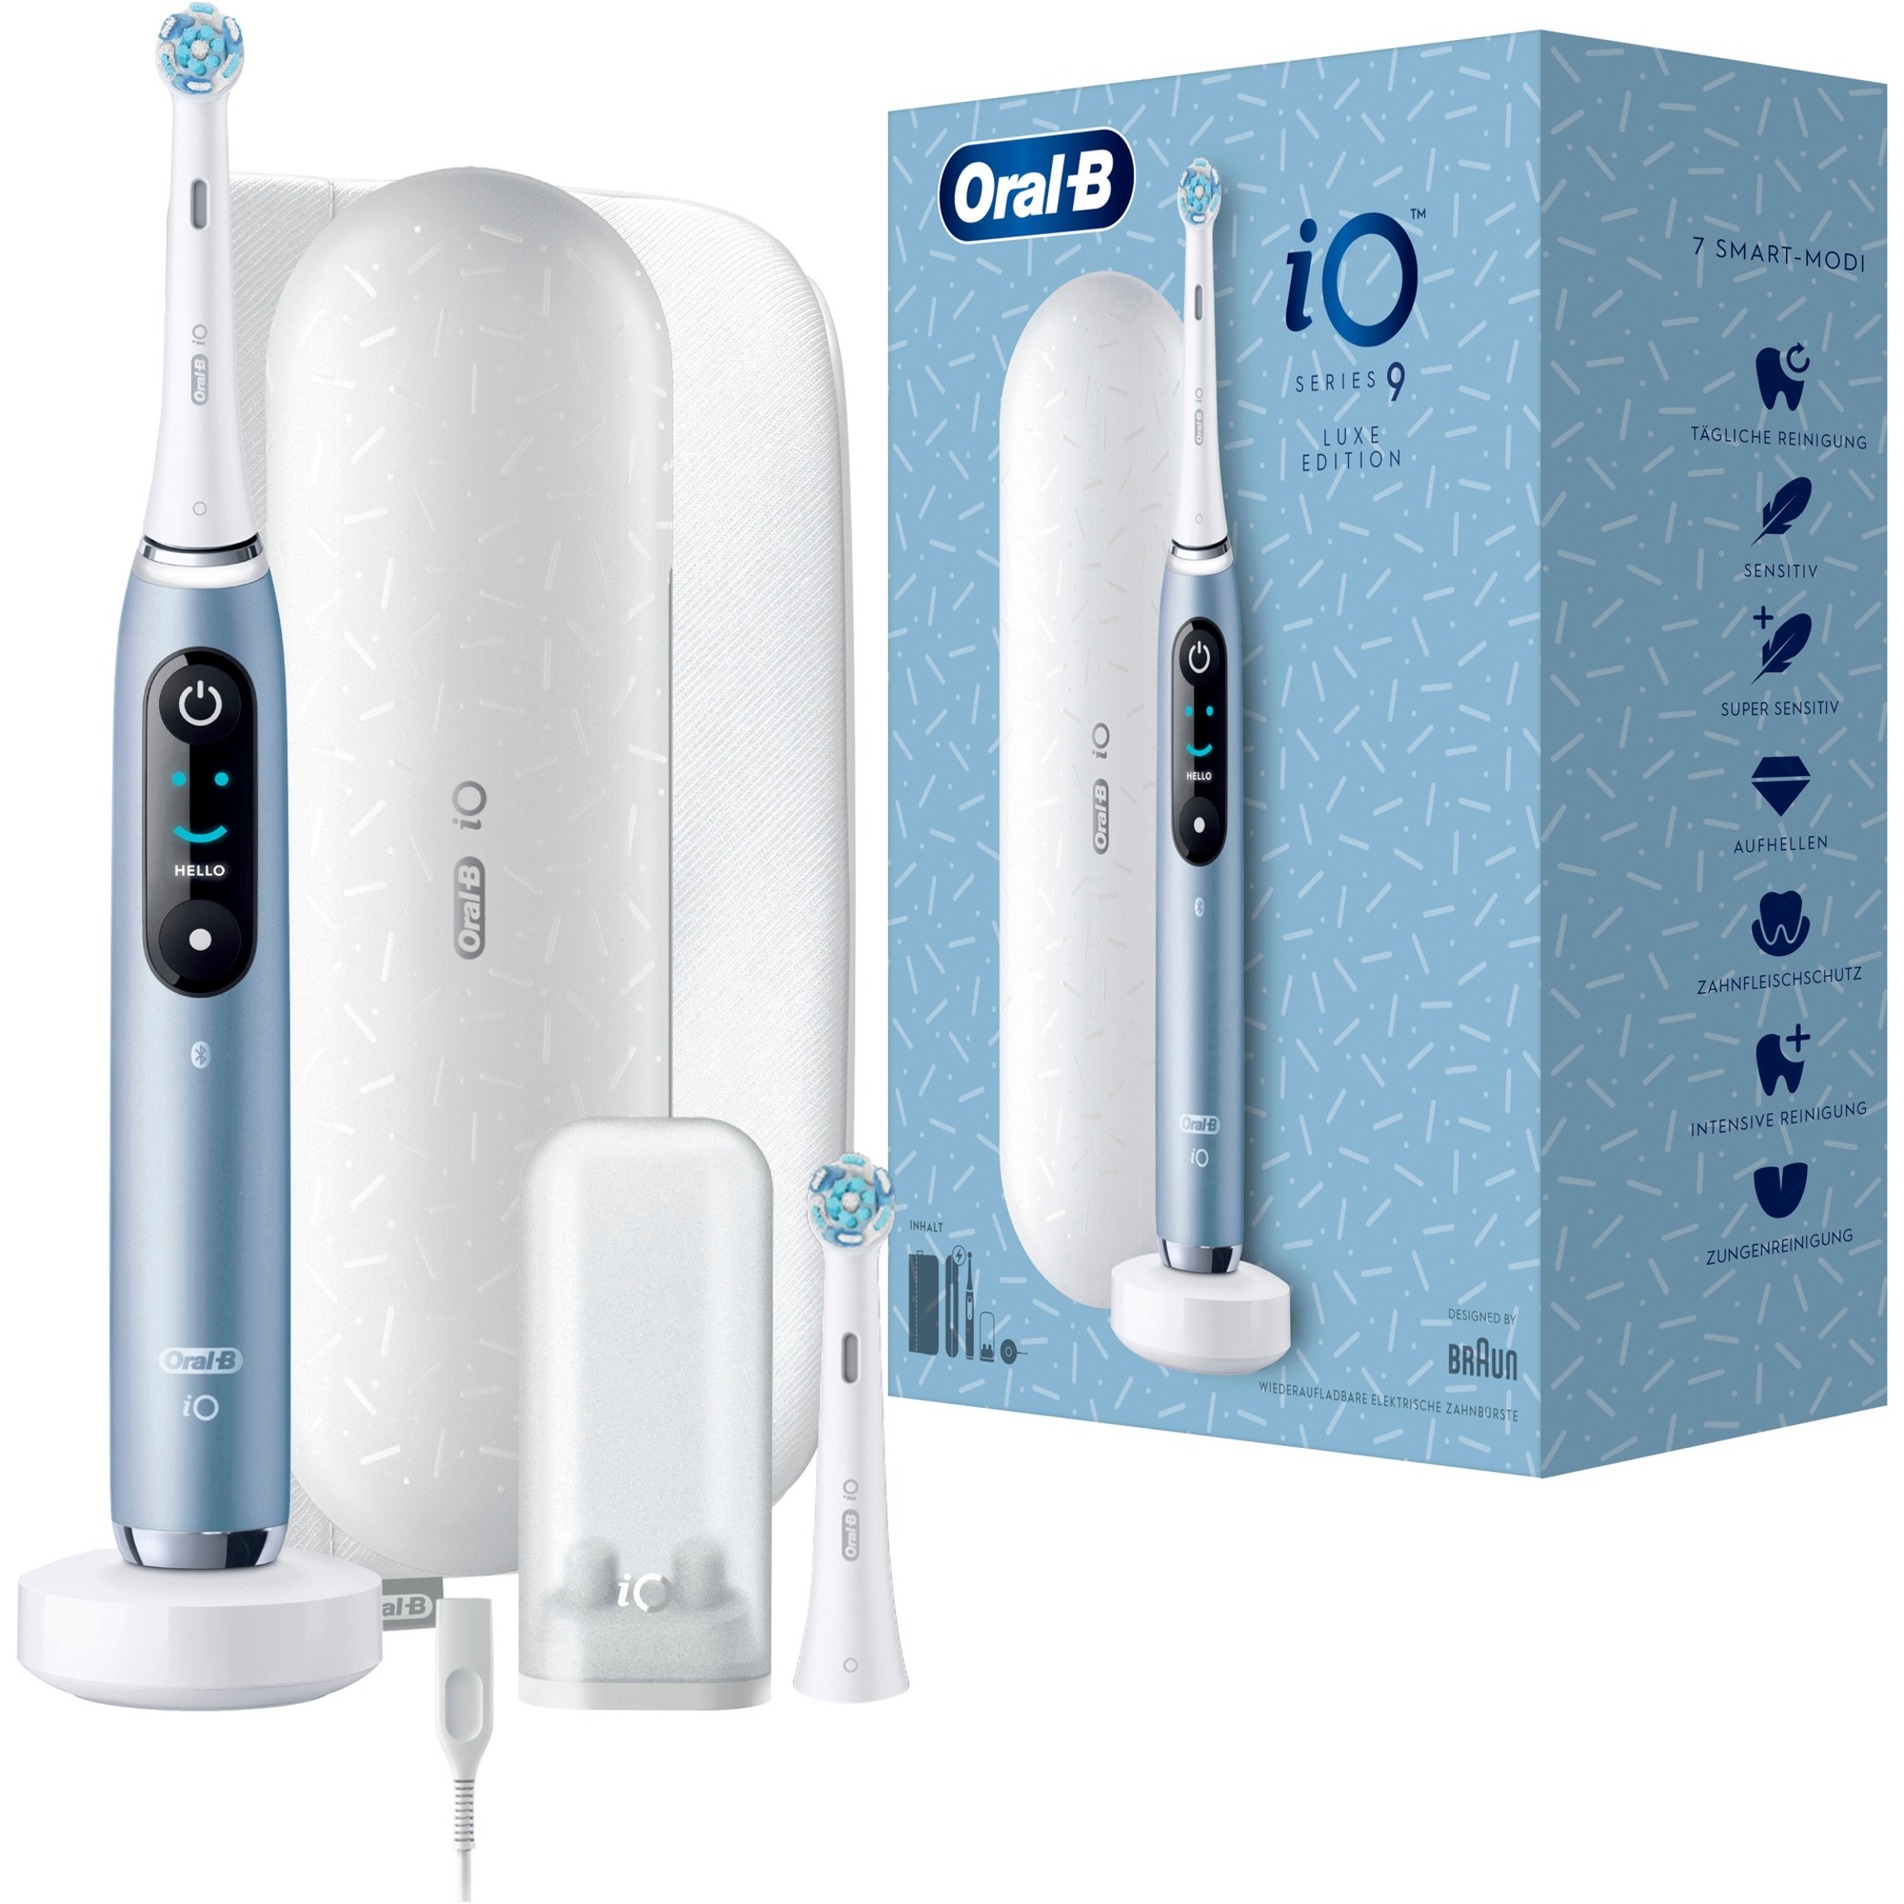 Oral-B iO 9 Special Edition Elektrische Zahnbürste/Electric Toothbrush mit Magnet-Technologie & Mikrovibrationen, 7 Modi, 3D-Zahnanalyse, Farbdisplay, Lade-Reiseetui & Beauty-Tasche, black onyx